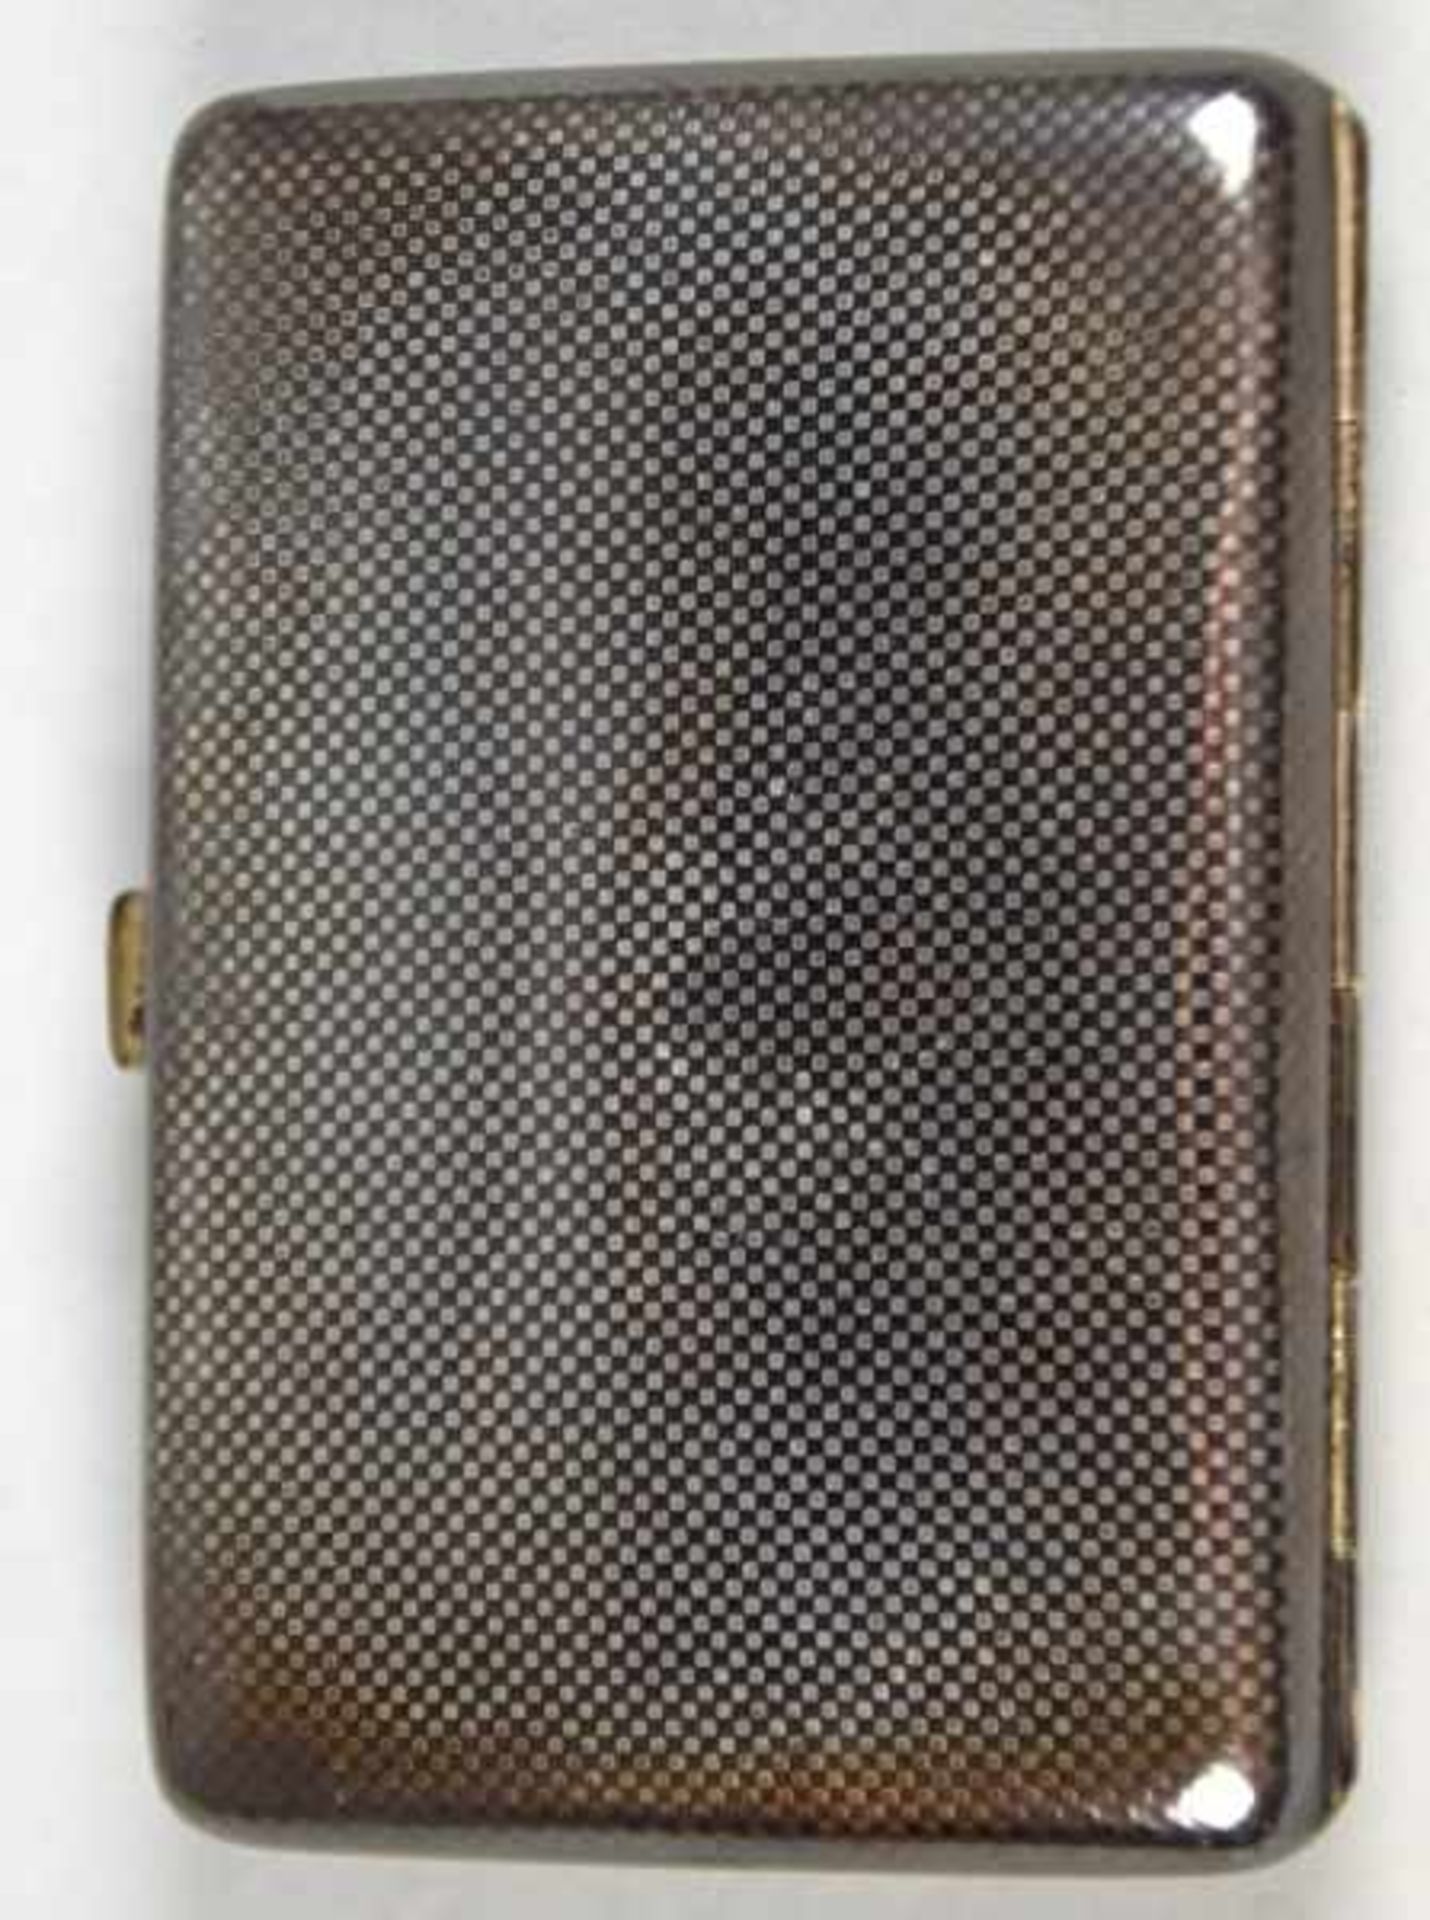 ZIGARETTENETUI rechteckige Form, Oberfläche mit ziseliertem Dekor, Innenvergoldung, Robert Kraft, - Bild 4 aus 5